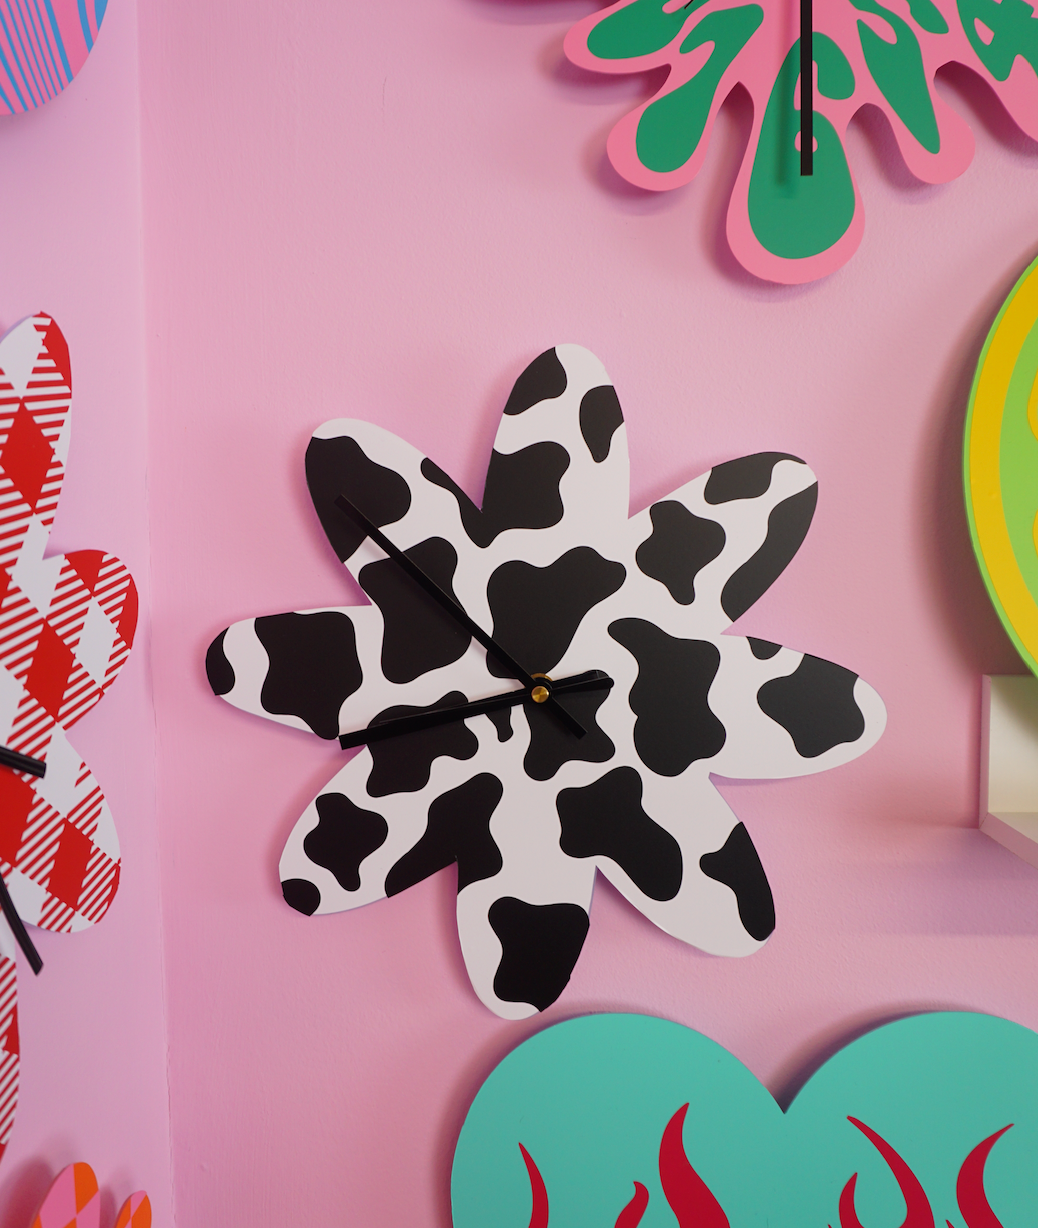 Cow print flower shaped decorative clock silent movement